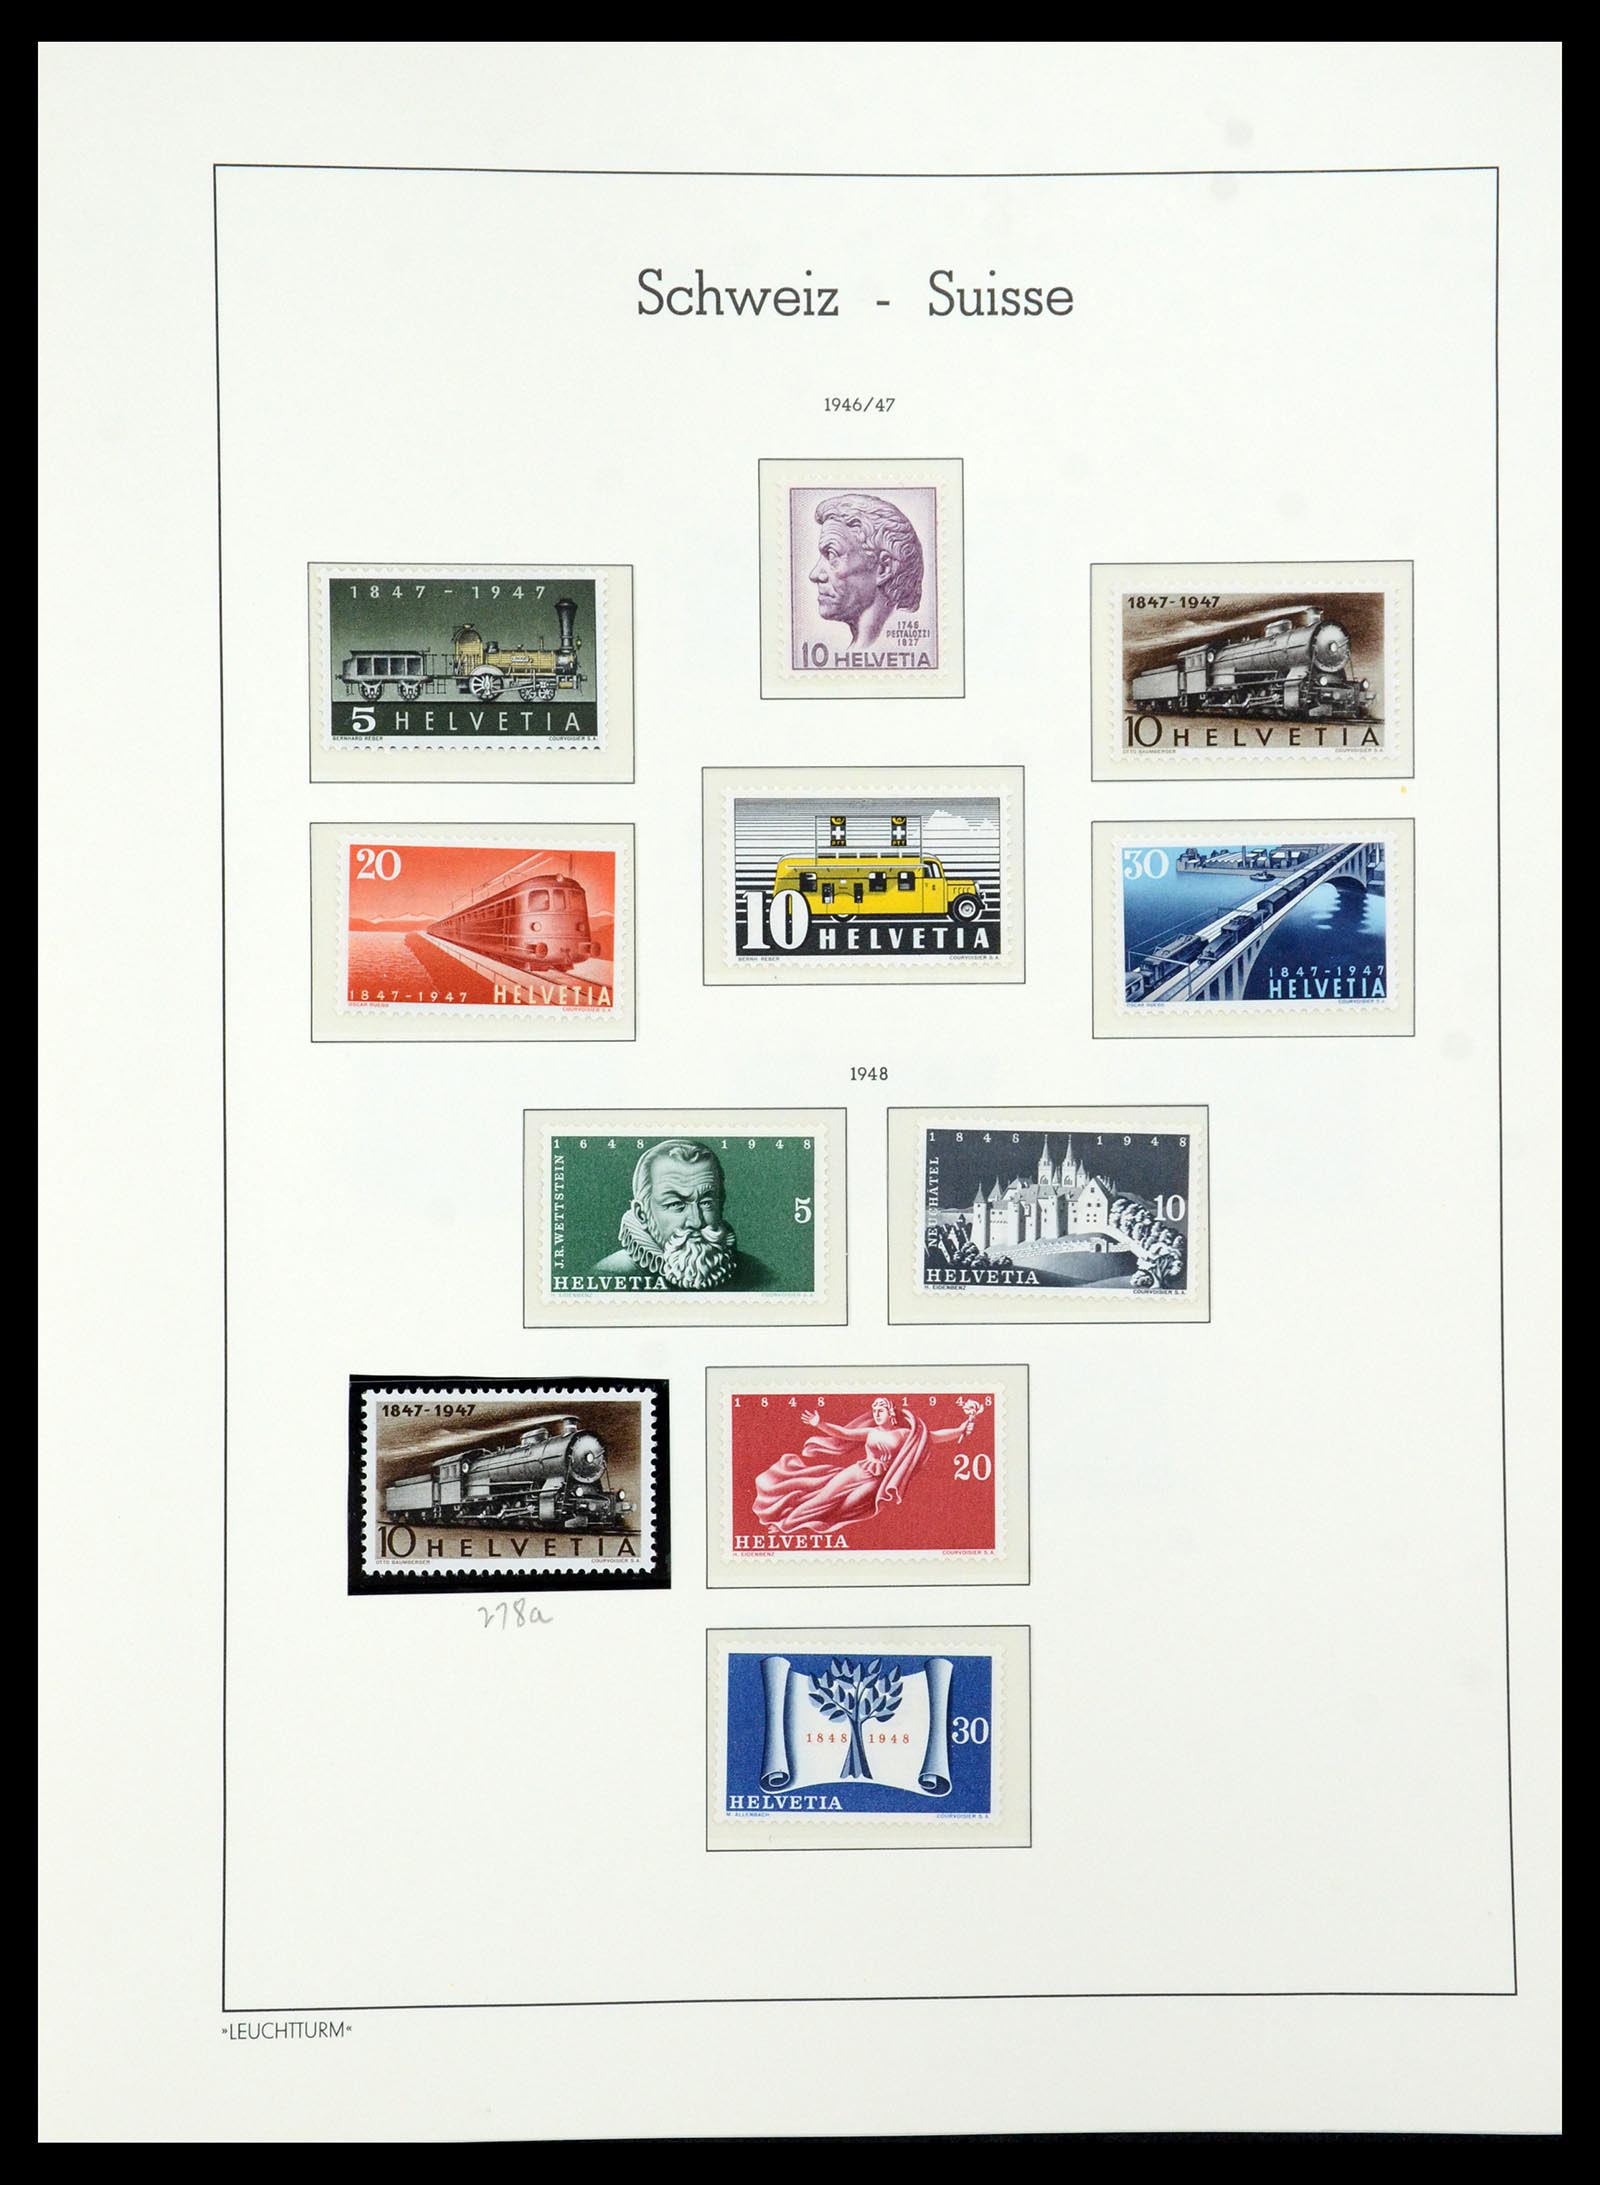 36284 051 - Stamp collection 36284 Switzerland 1854-2006.